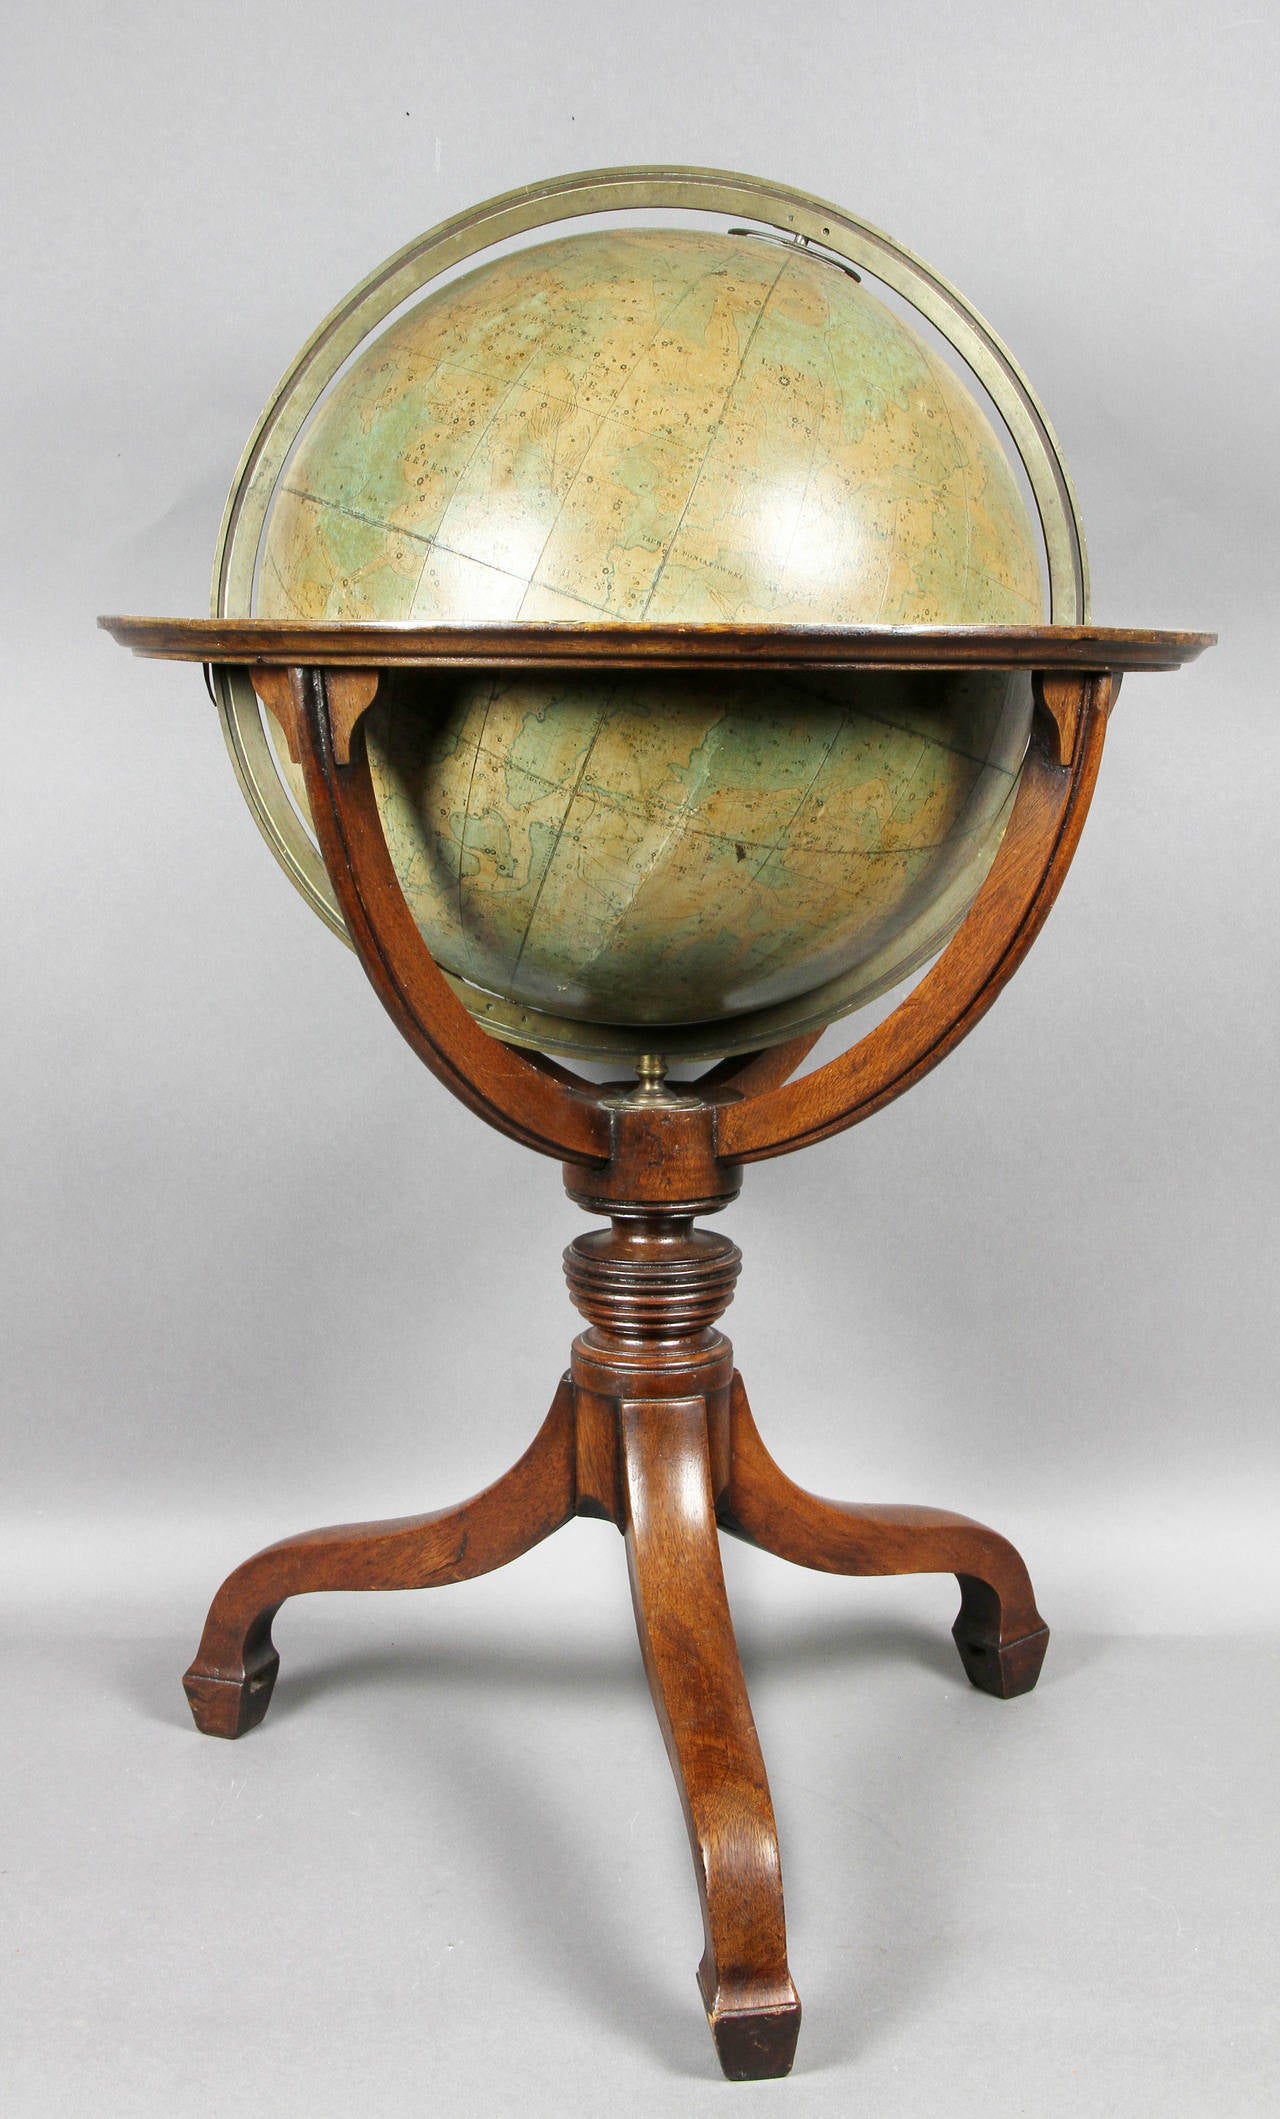 English Late Regency Celestrial Table Globe by James Wyld, London